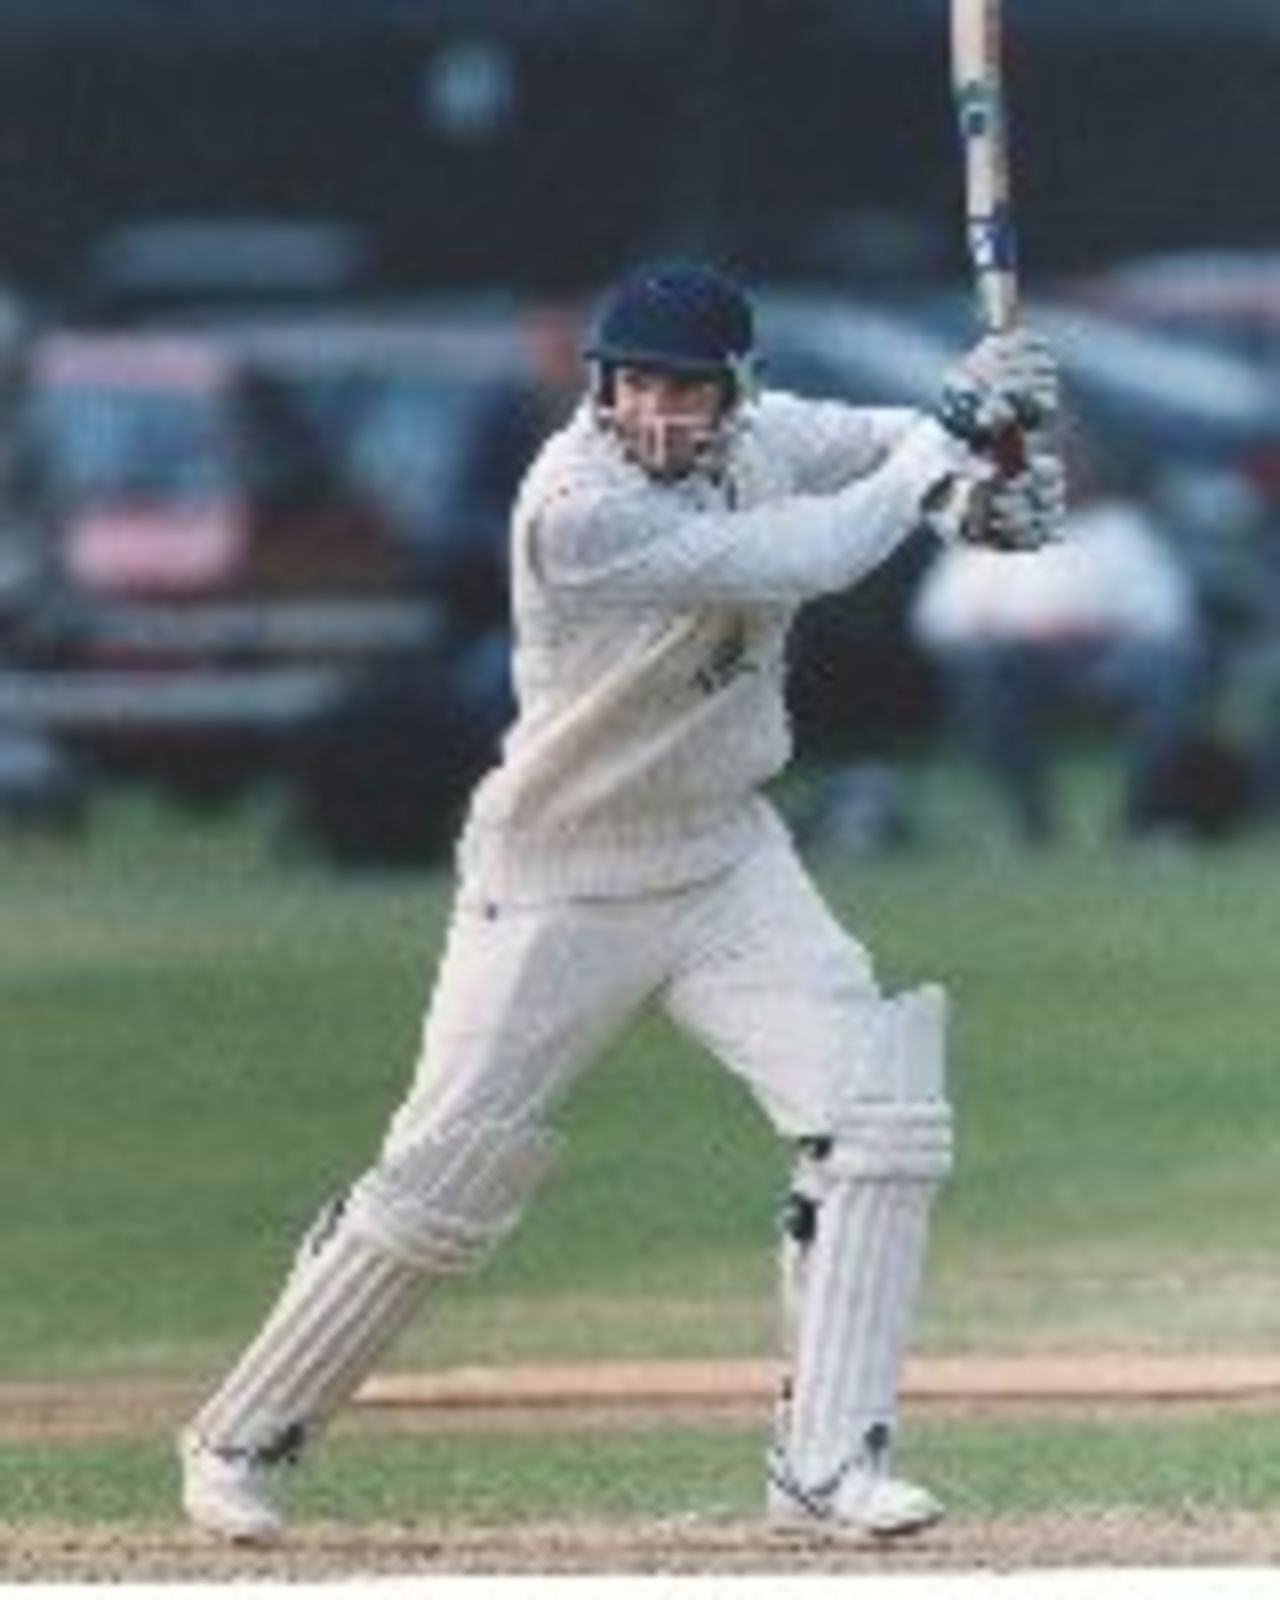 Steve James batting for Glamorgan against Sussex at Sophia Gardens, Cardiff in 1993